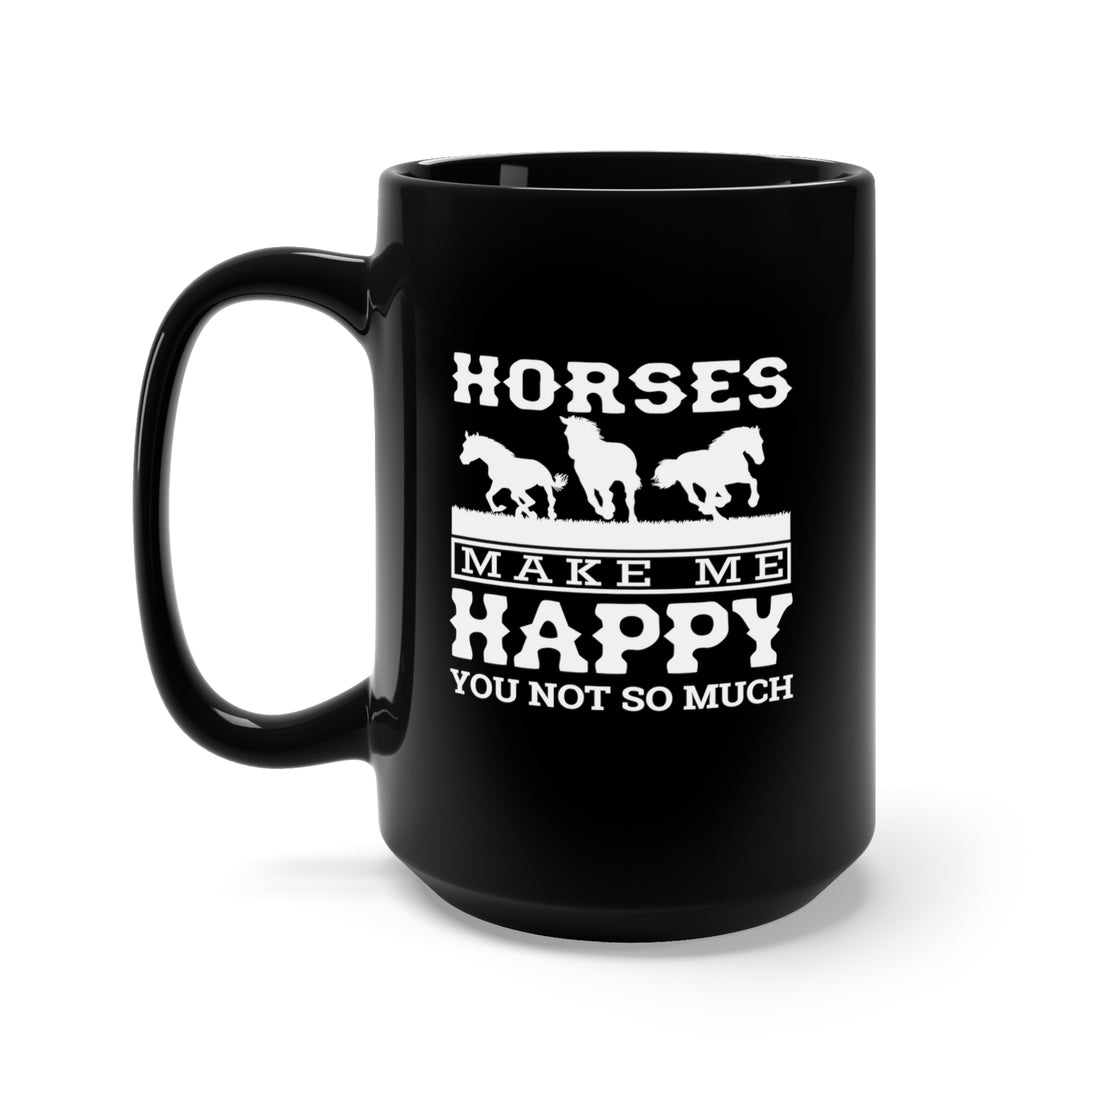 Horses Make Me Happy - Large 15oz Black Mug